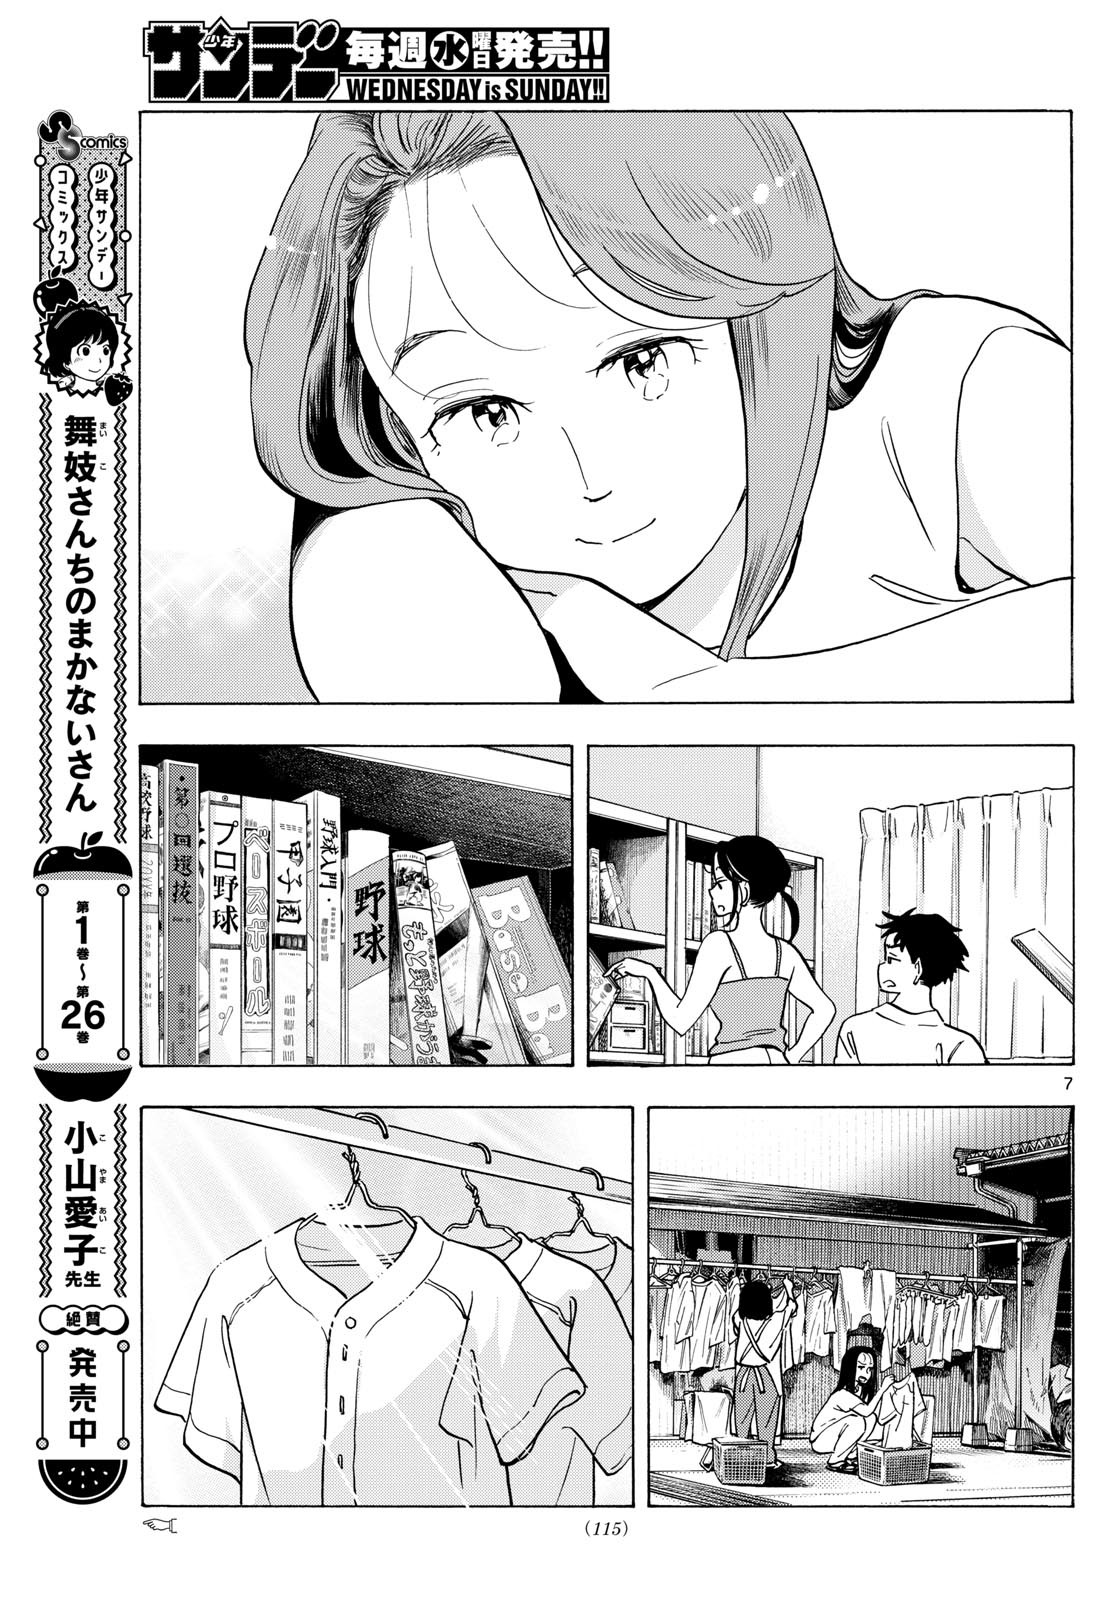 Maiko-san Chi no Makanai-san - Chapter 306 - Page 7